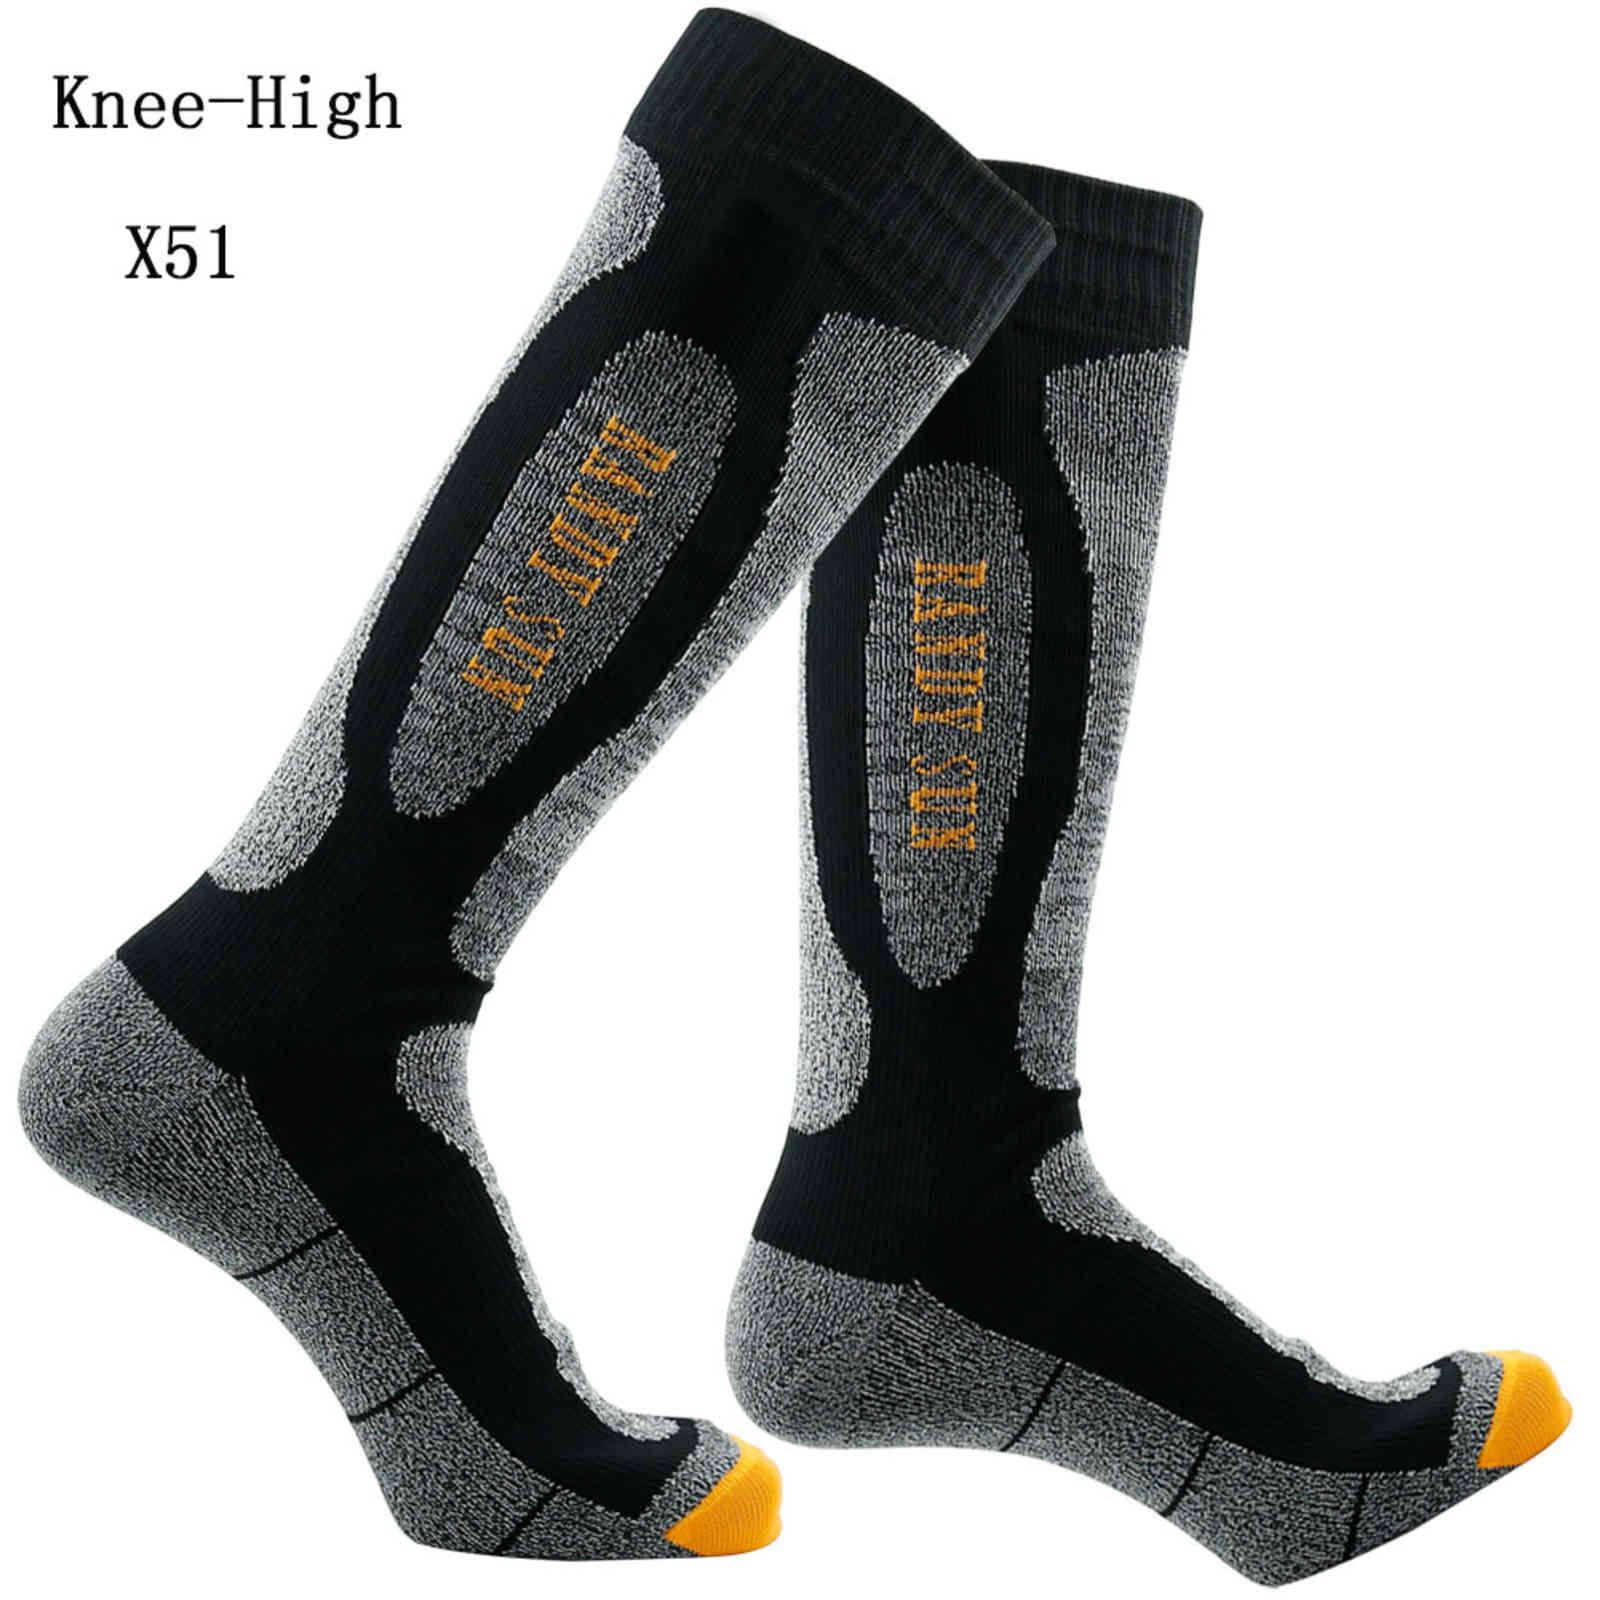 Knee High X51